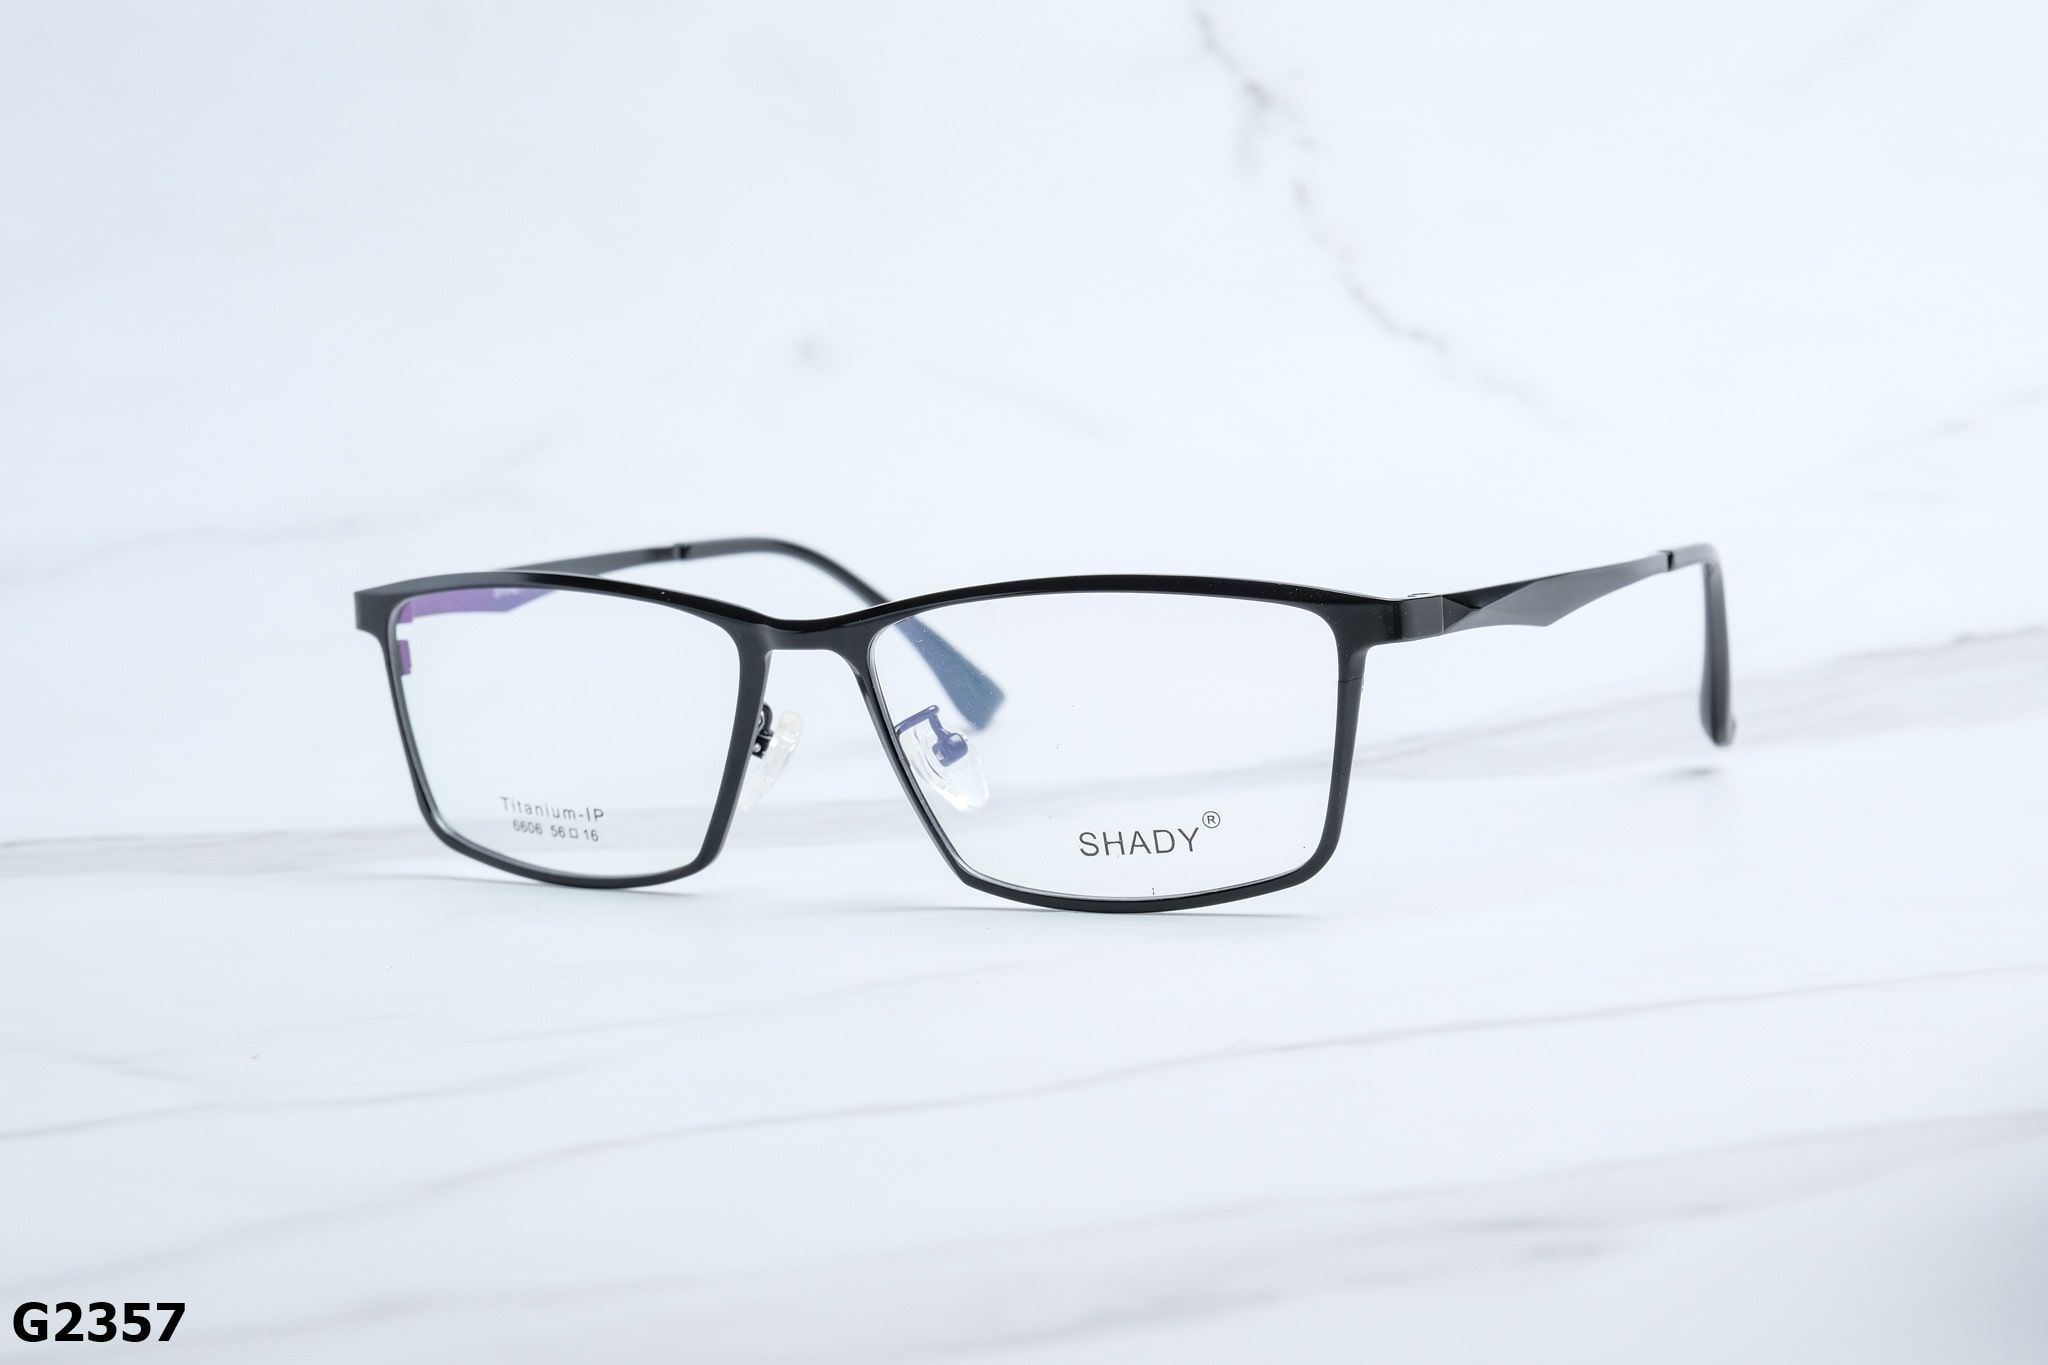  SHADY Eyewear - Glasses - G2357 